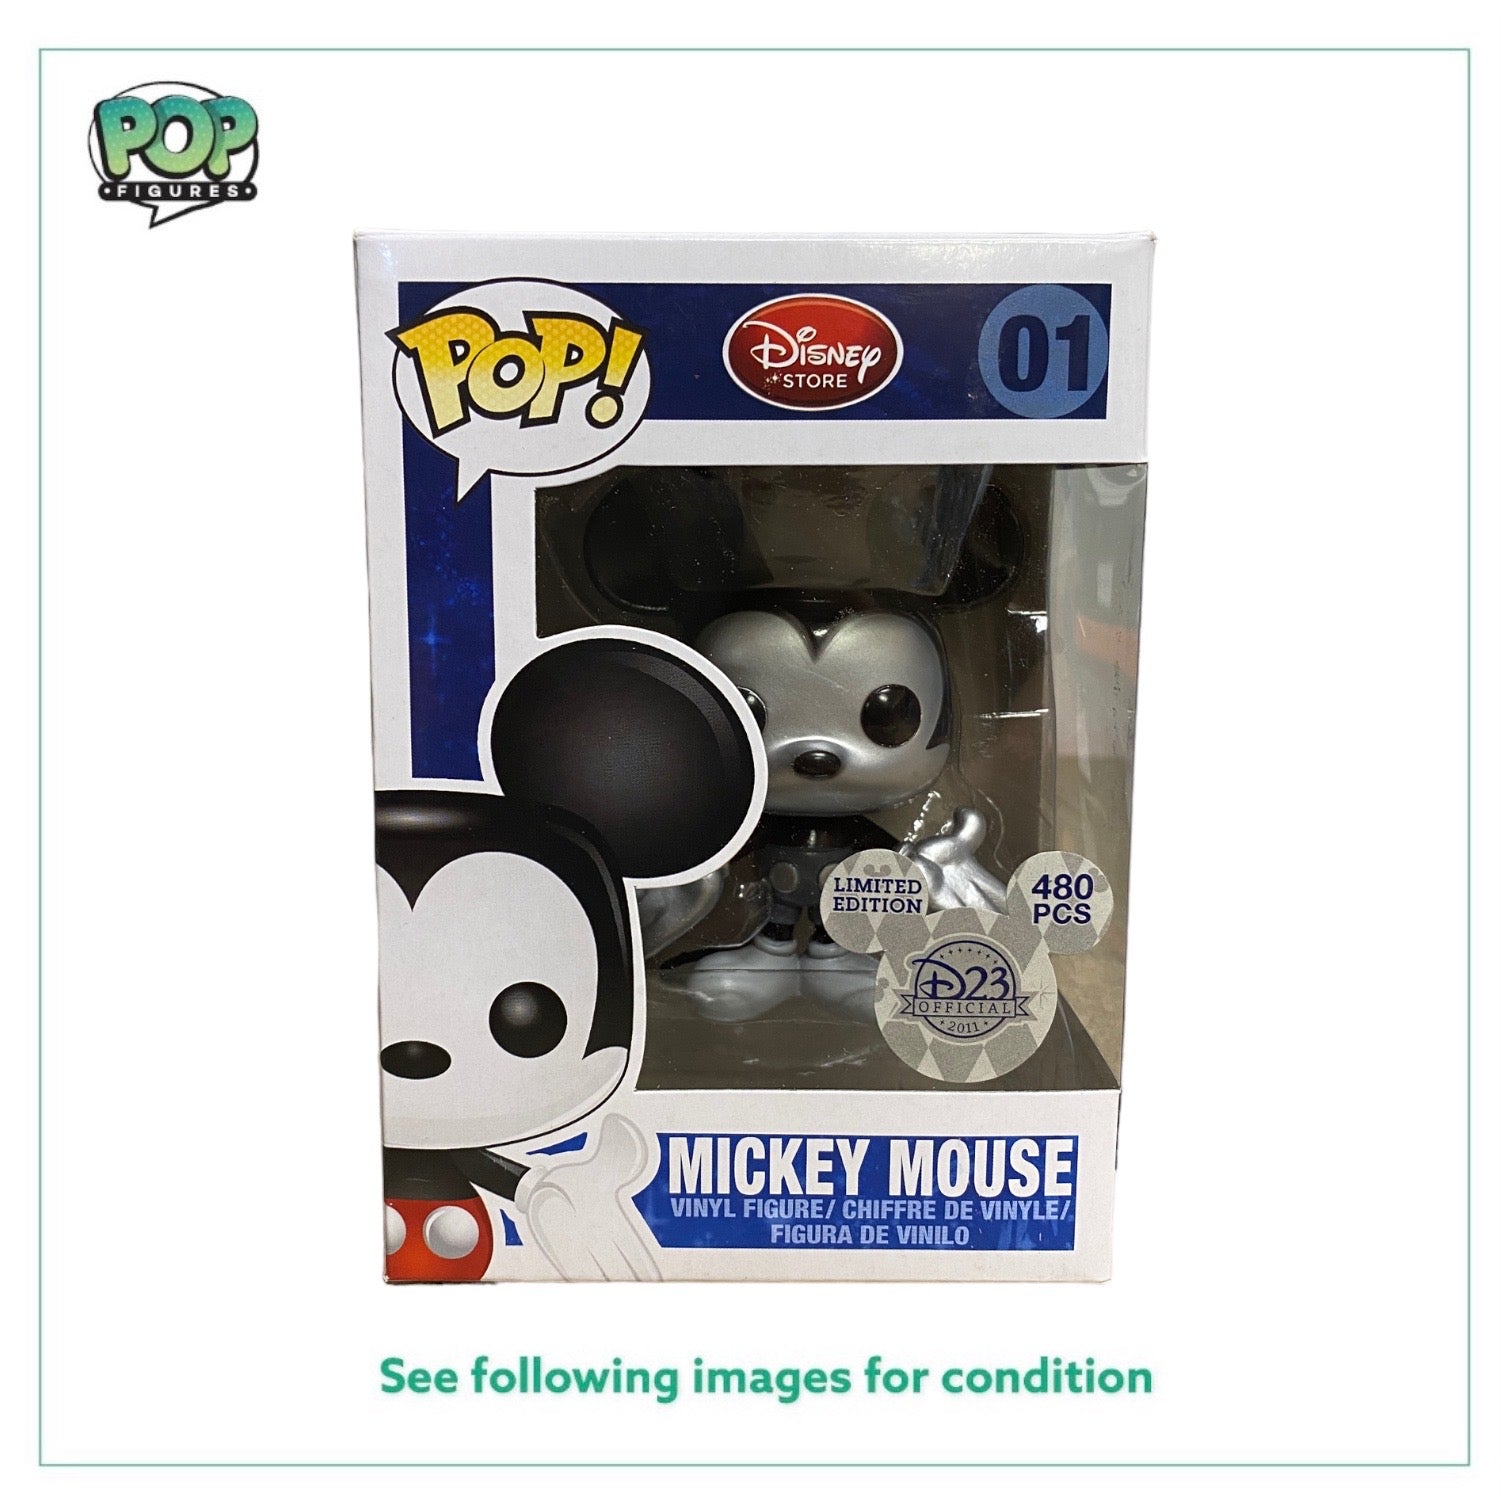 Mickey Mouse #01 (Metallic) Funko Pop! - Disney Series 1 - D23 Expo 2011 Exclusive - Condition 8.75/10